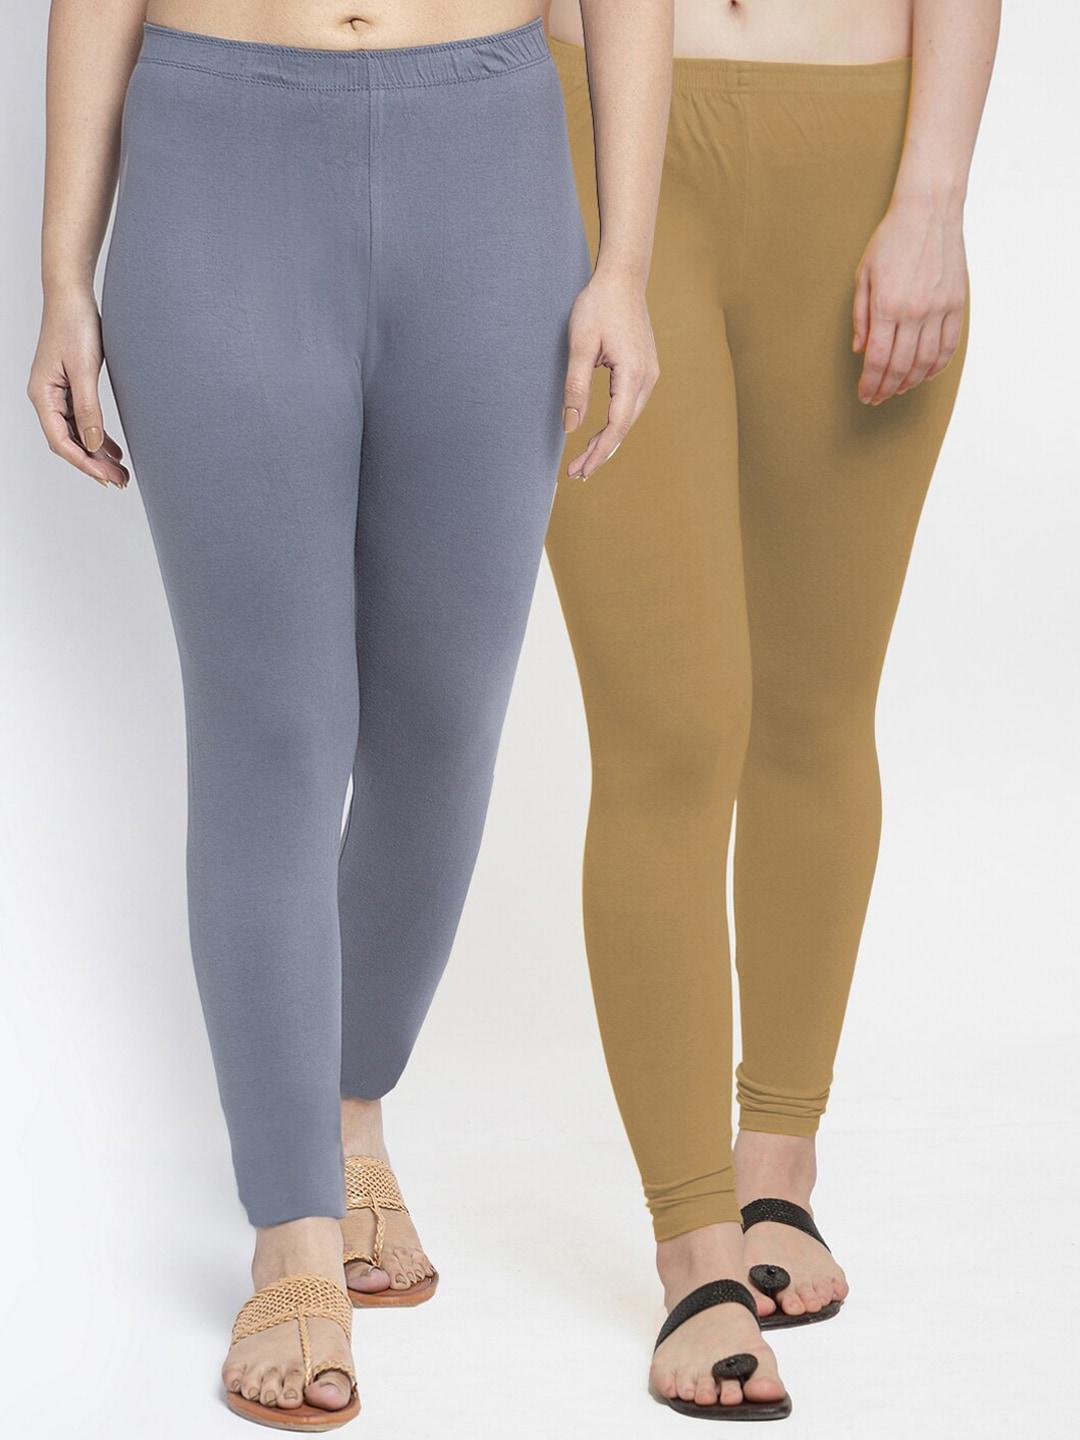 gracit-women-grey-&-beige-pack-of-2-solid-ankle-length-leggings